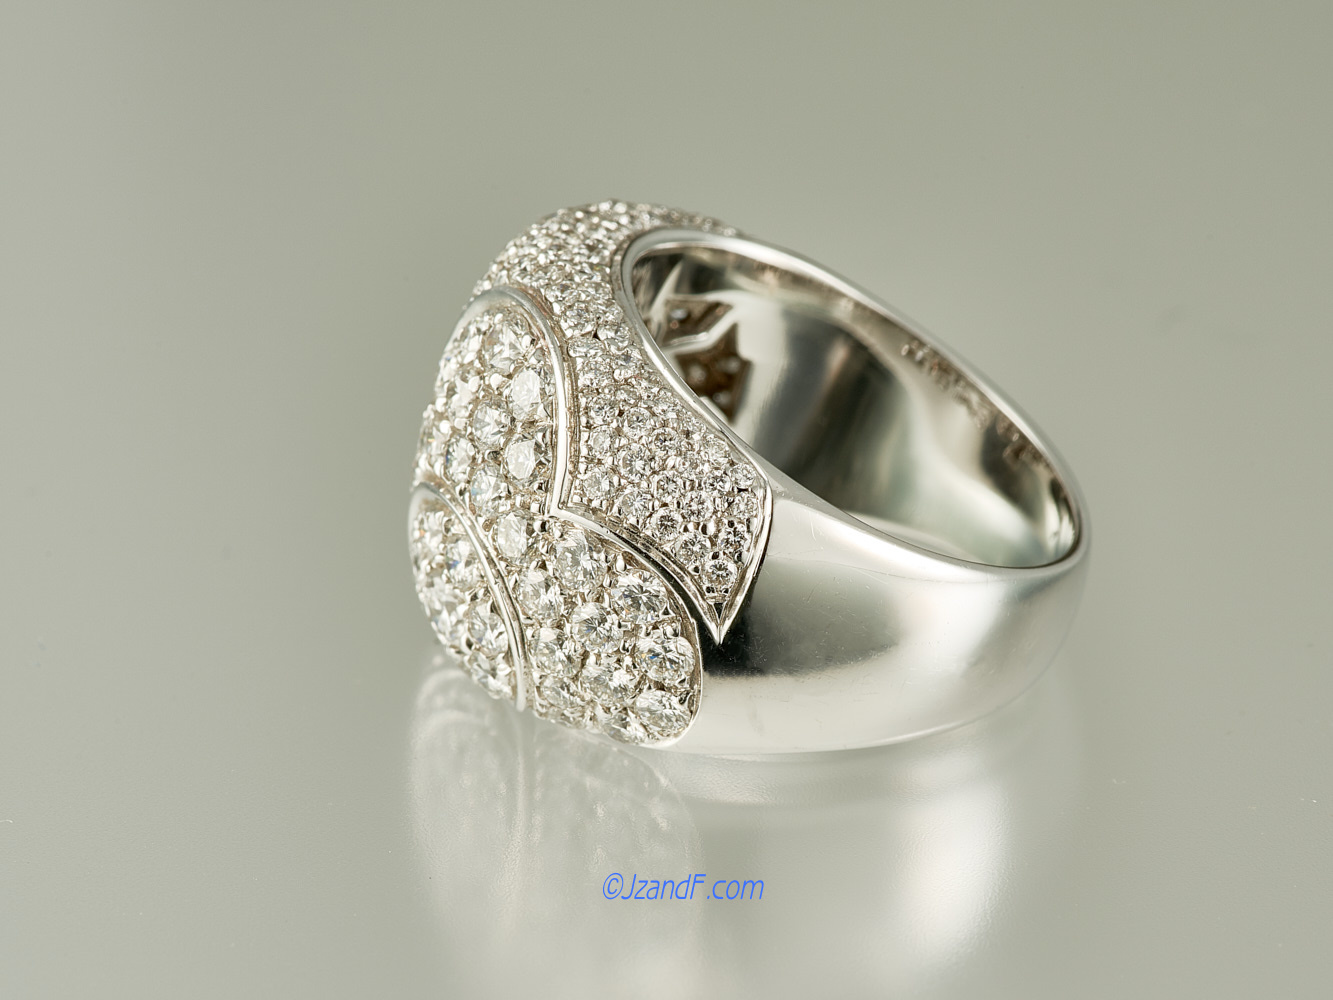 FRED of Paris Lovelight 950 Platinum Diamond Ring, Sizes 5.5 to 7.5